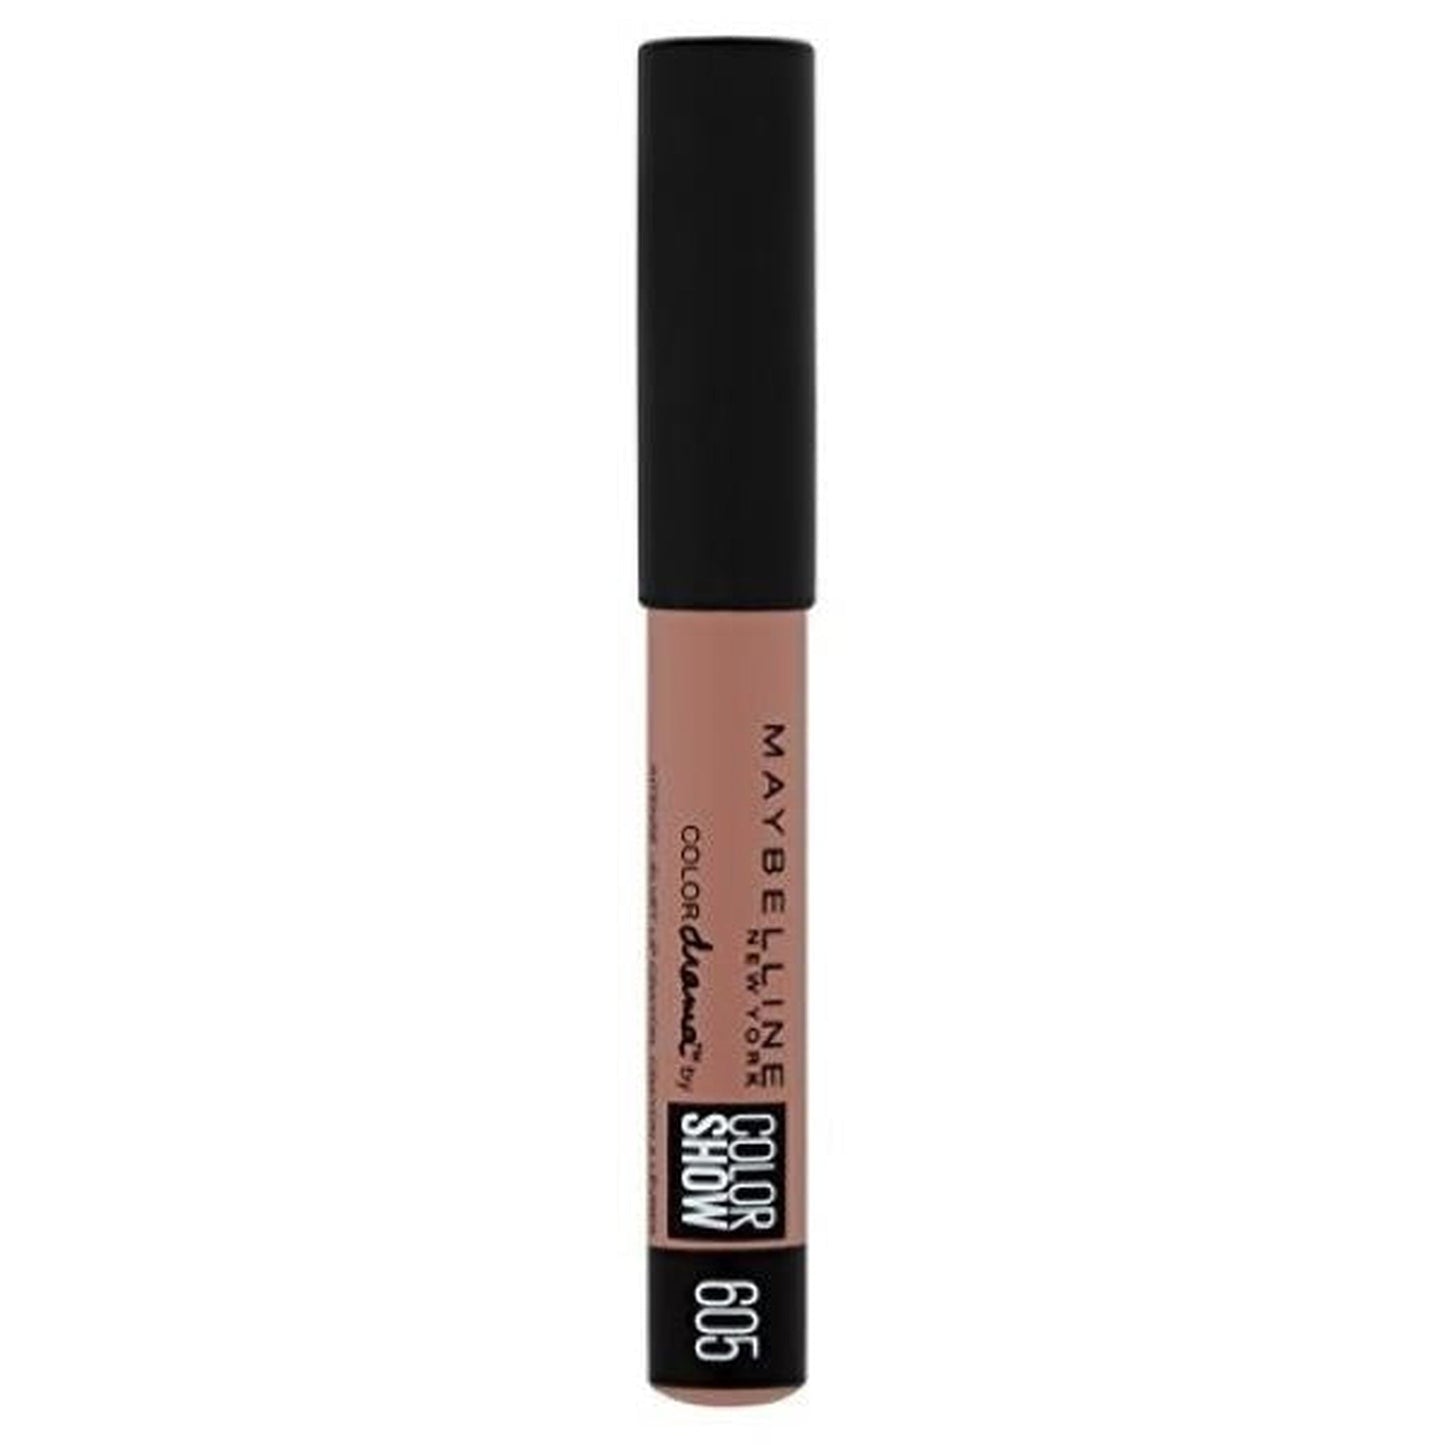 Maybelline New York Color Drama Intense Velvet Lip Pencil - 605 Caramel Latte-Maybelline-BeautyNmakeup.co.uk